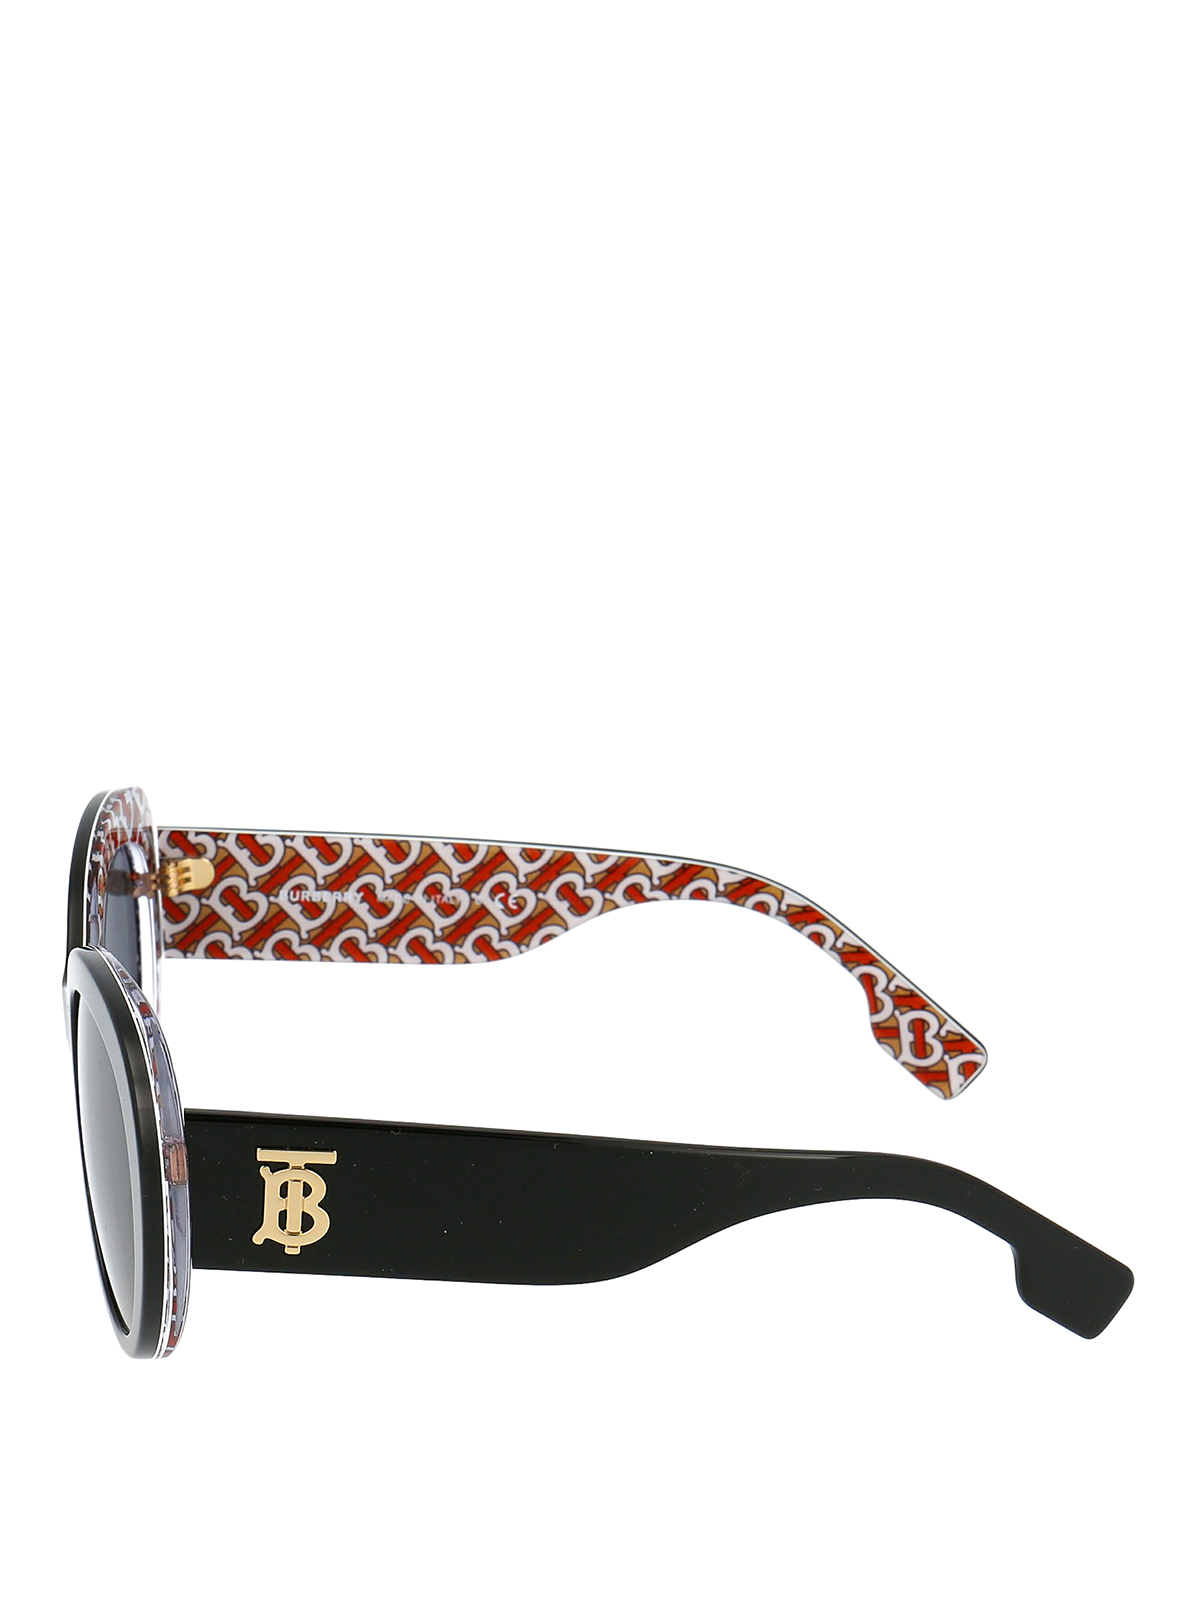 Sunglasses Burberry - TB monogram detailed over sunglasses - 0BE4298382287